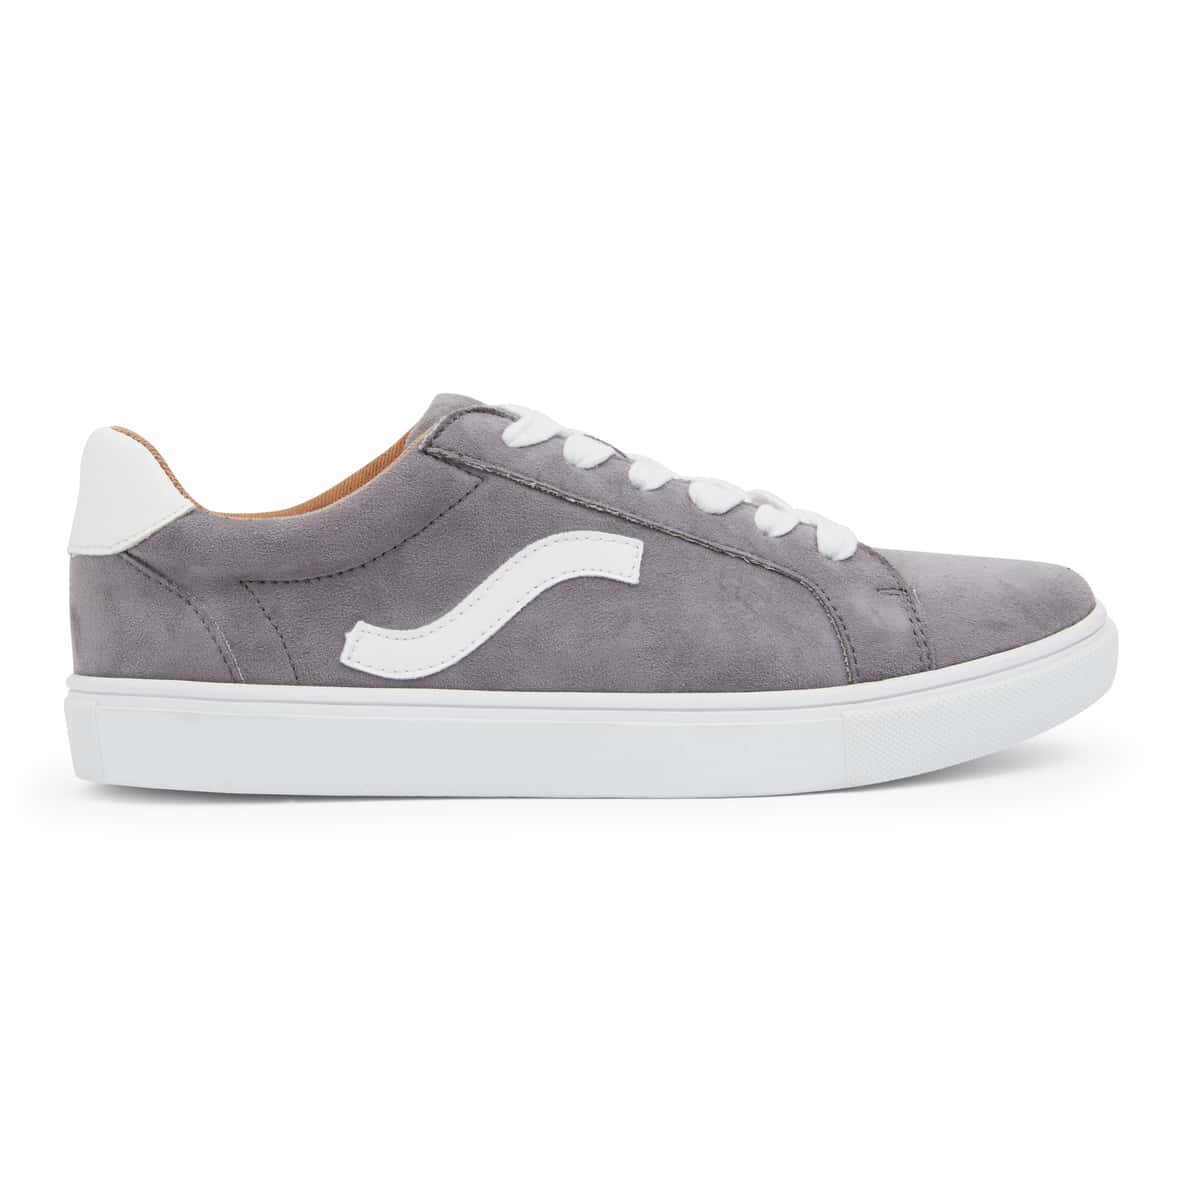 Swerve Sneaker in Grey Suede